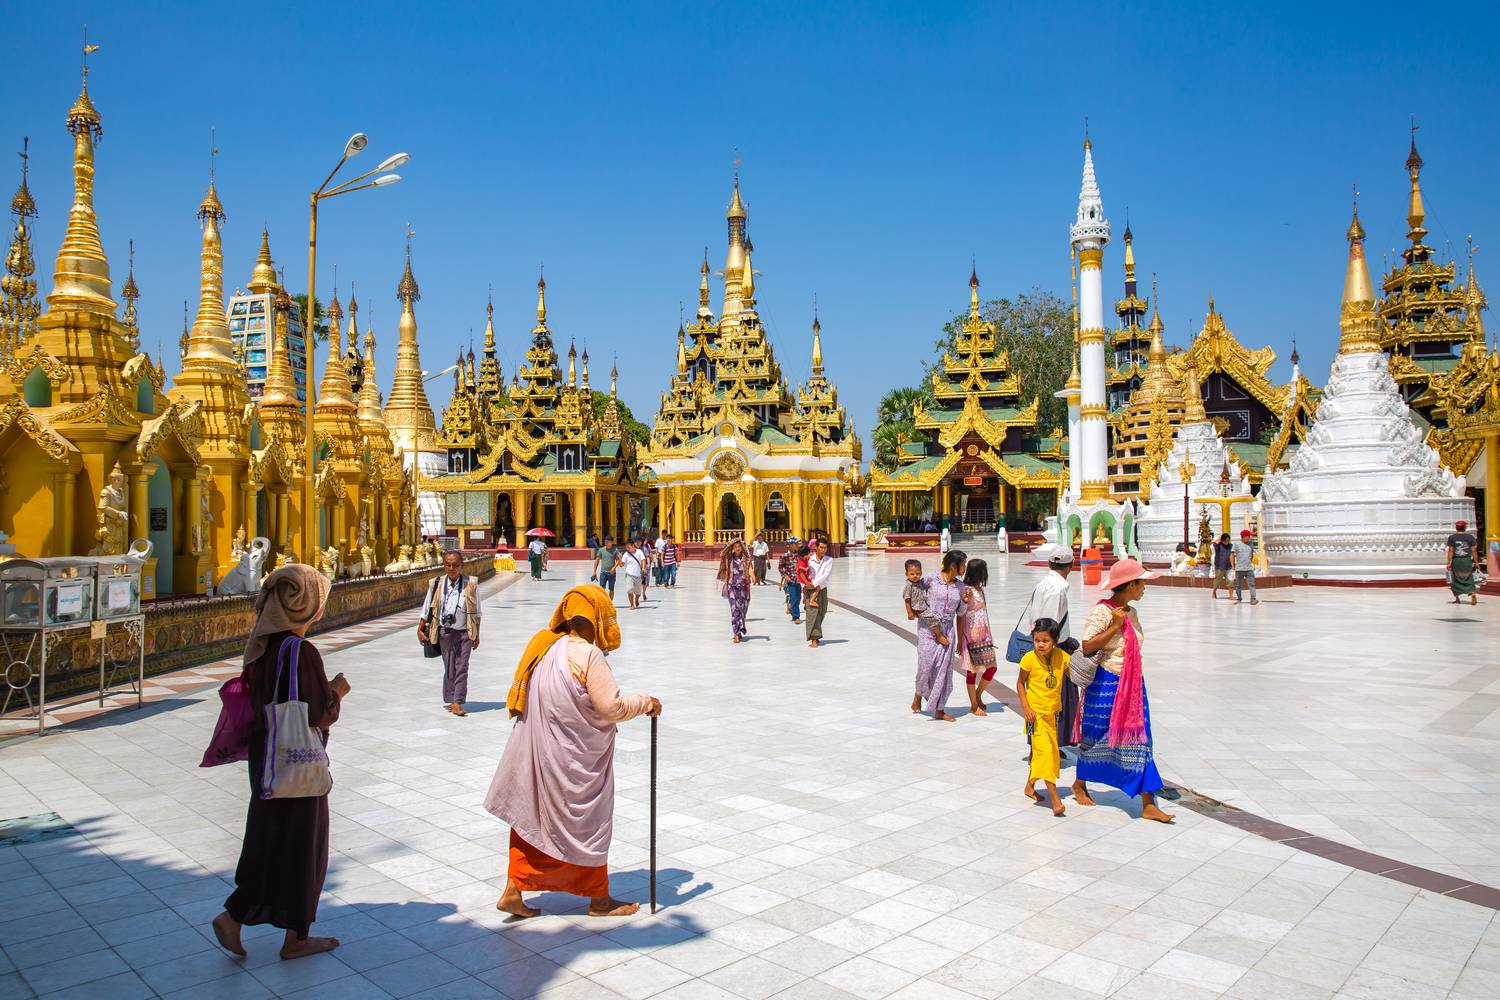 Shwedagon-Pagode in Yangon, Myanmar (Burma) from Miro May